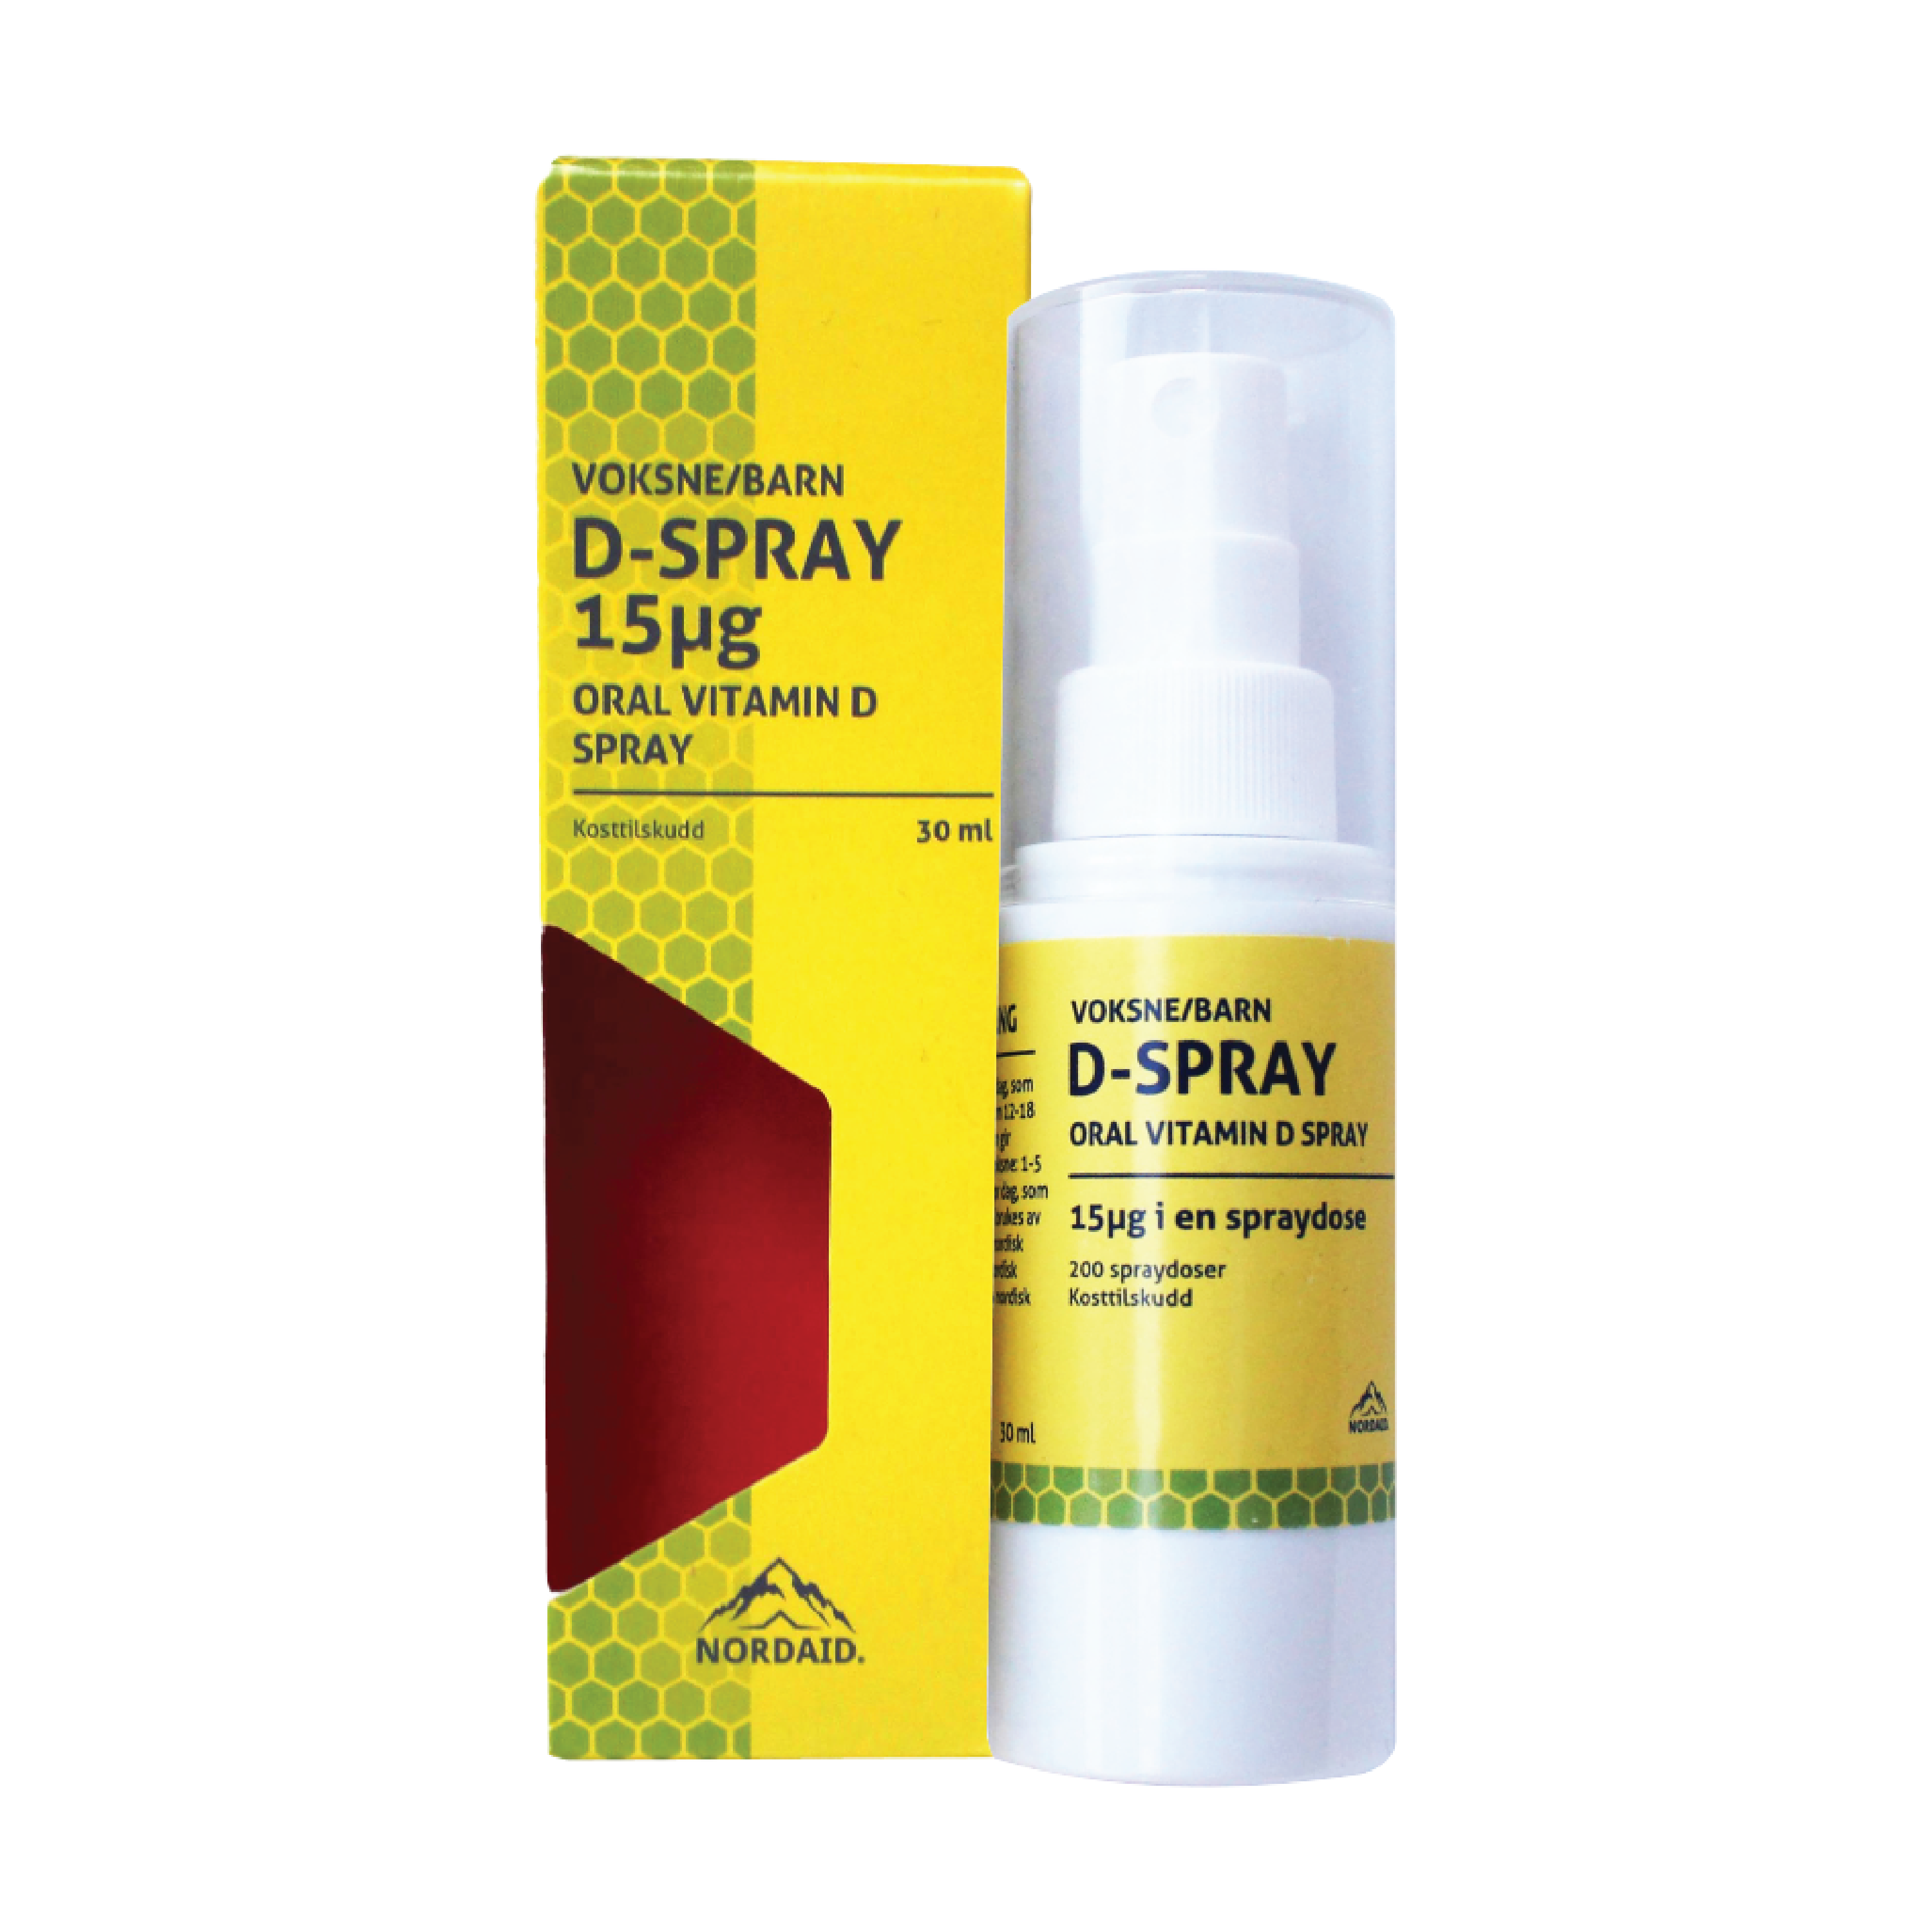 Nordaid D-Spray 15 µg Munnspray, 30 ml